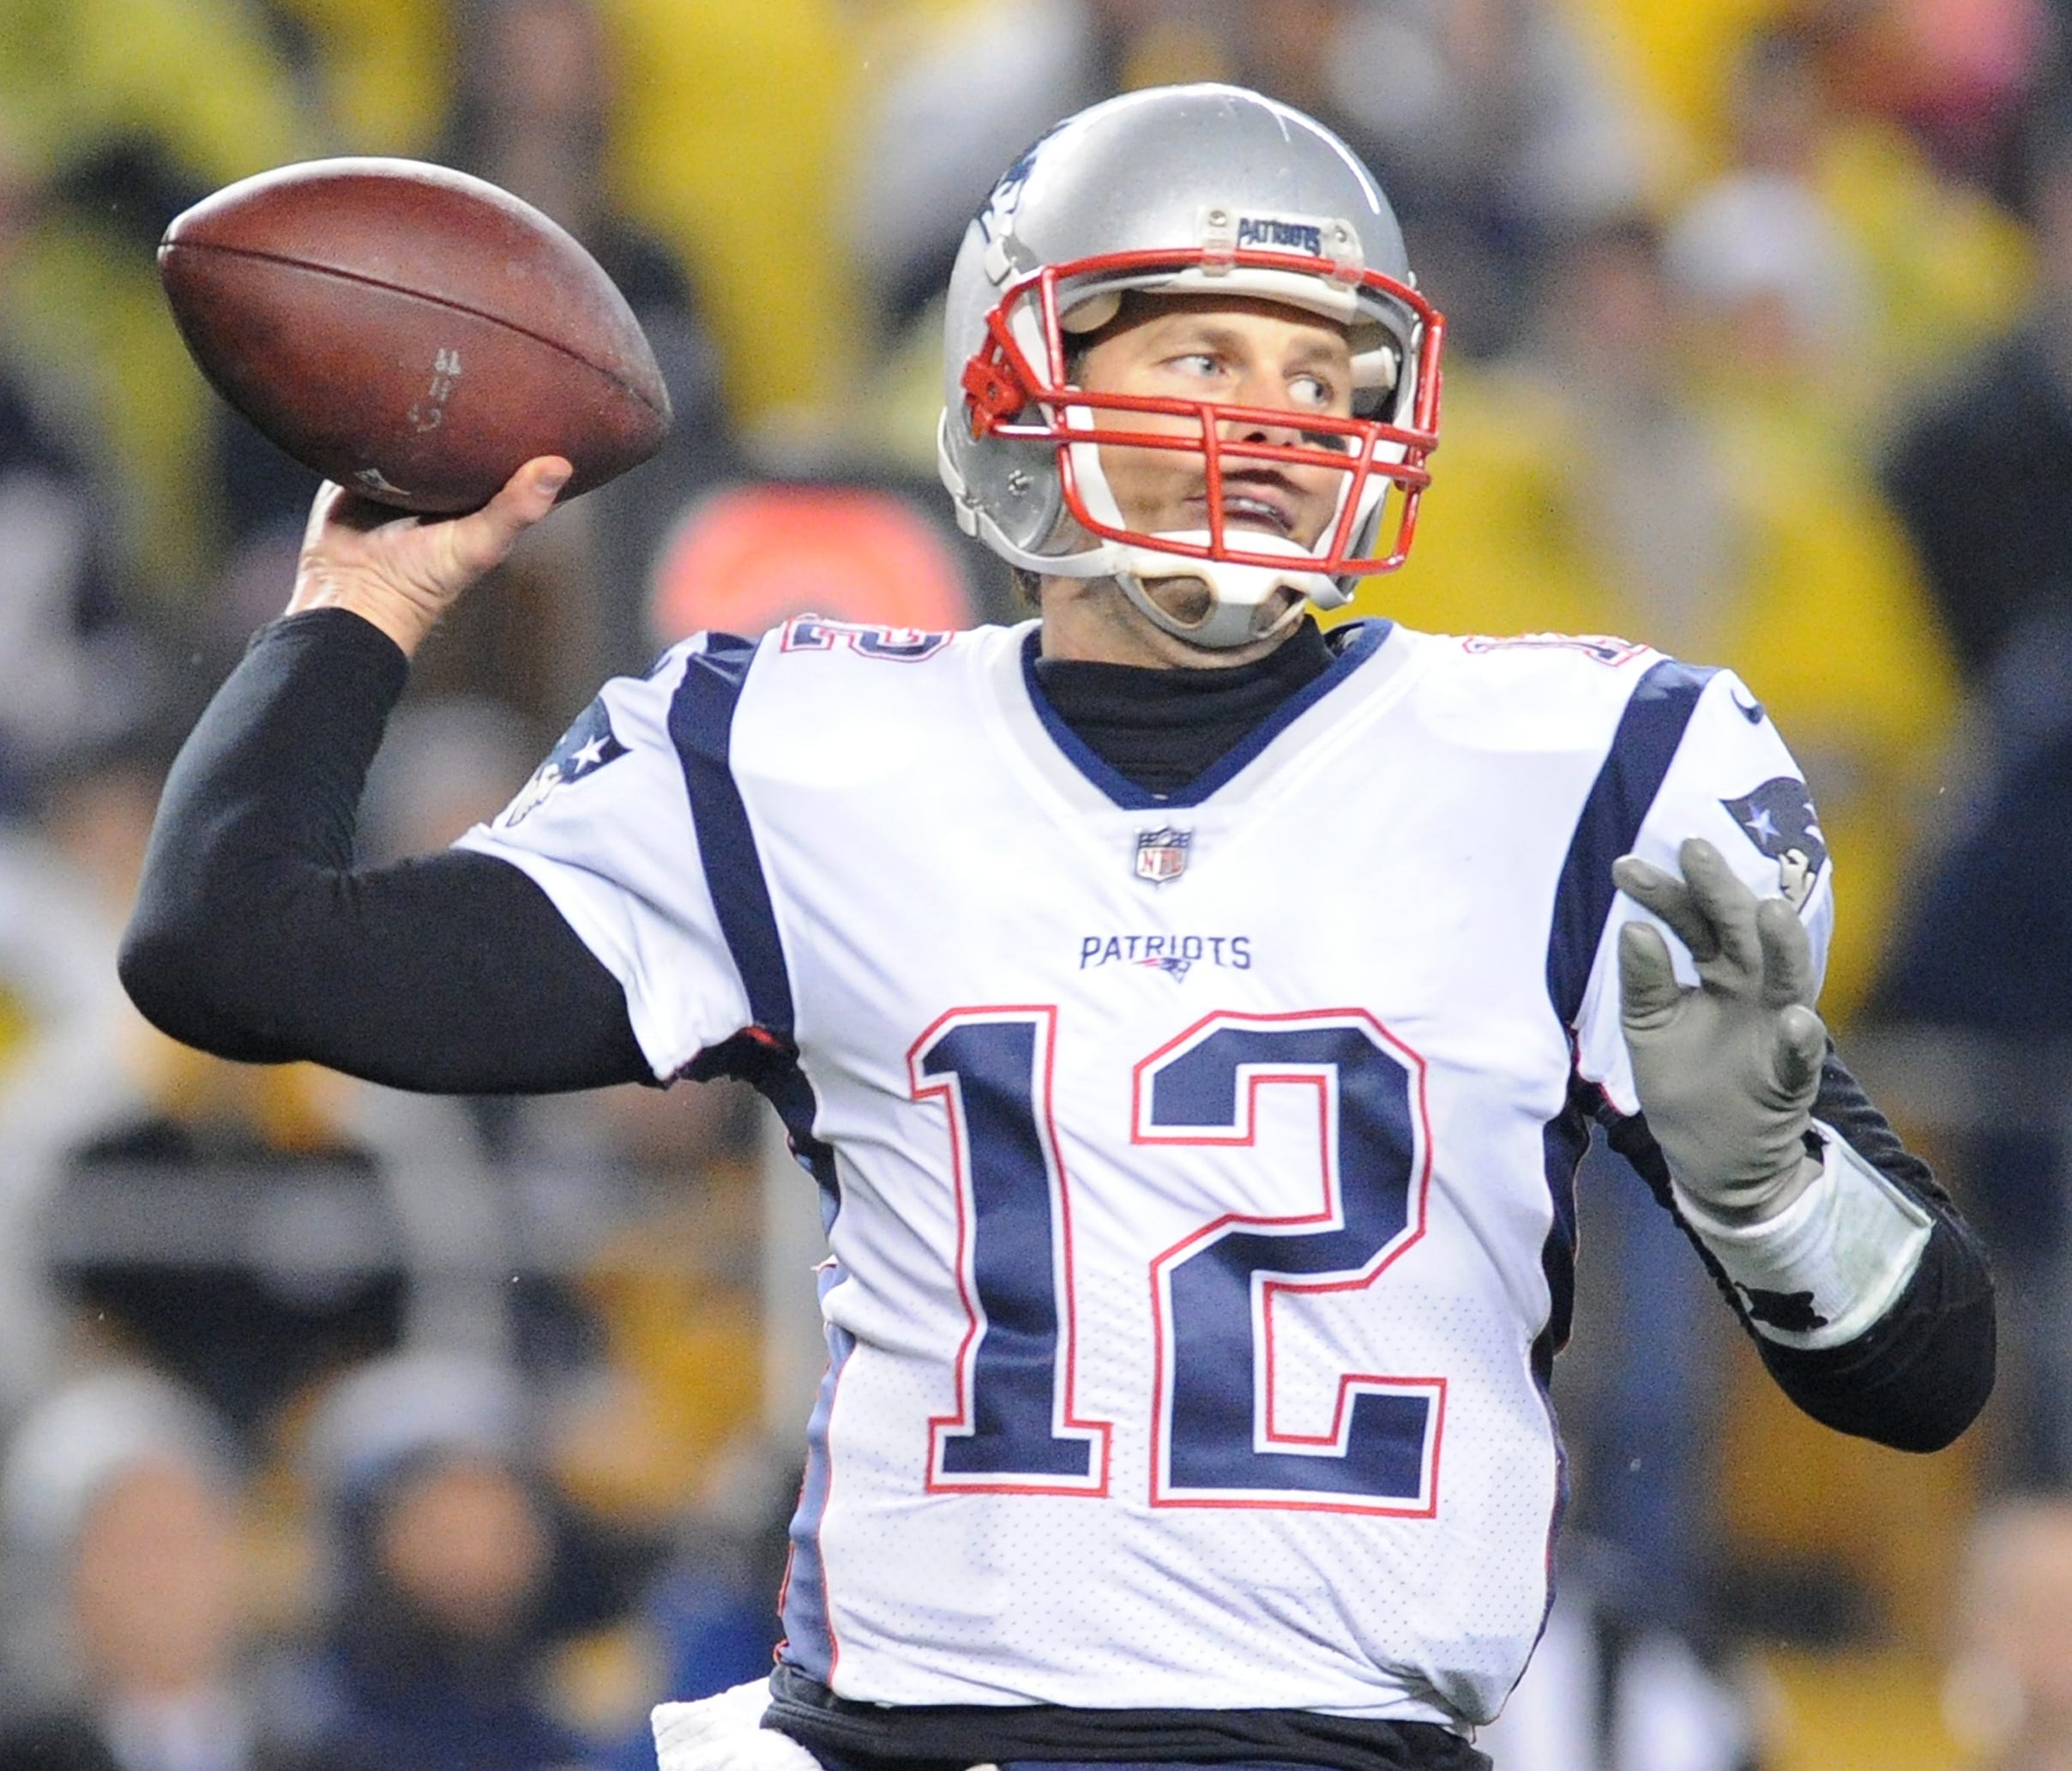 QB - Tom Brady, New England Patriots